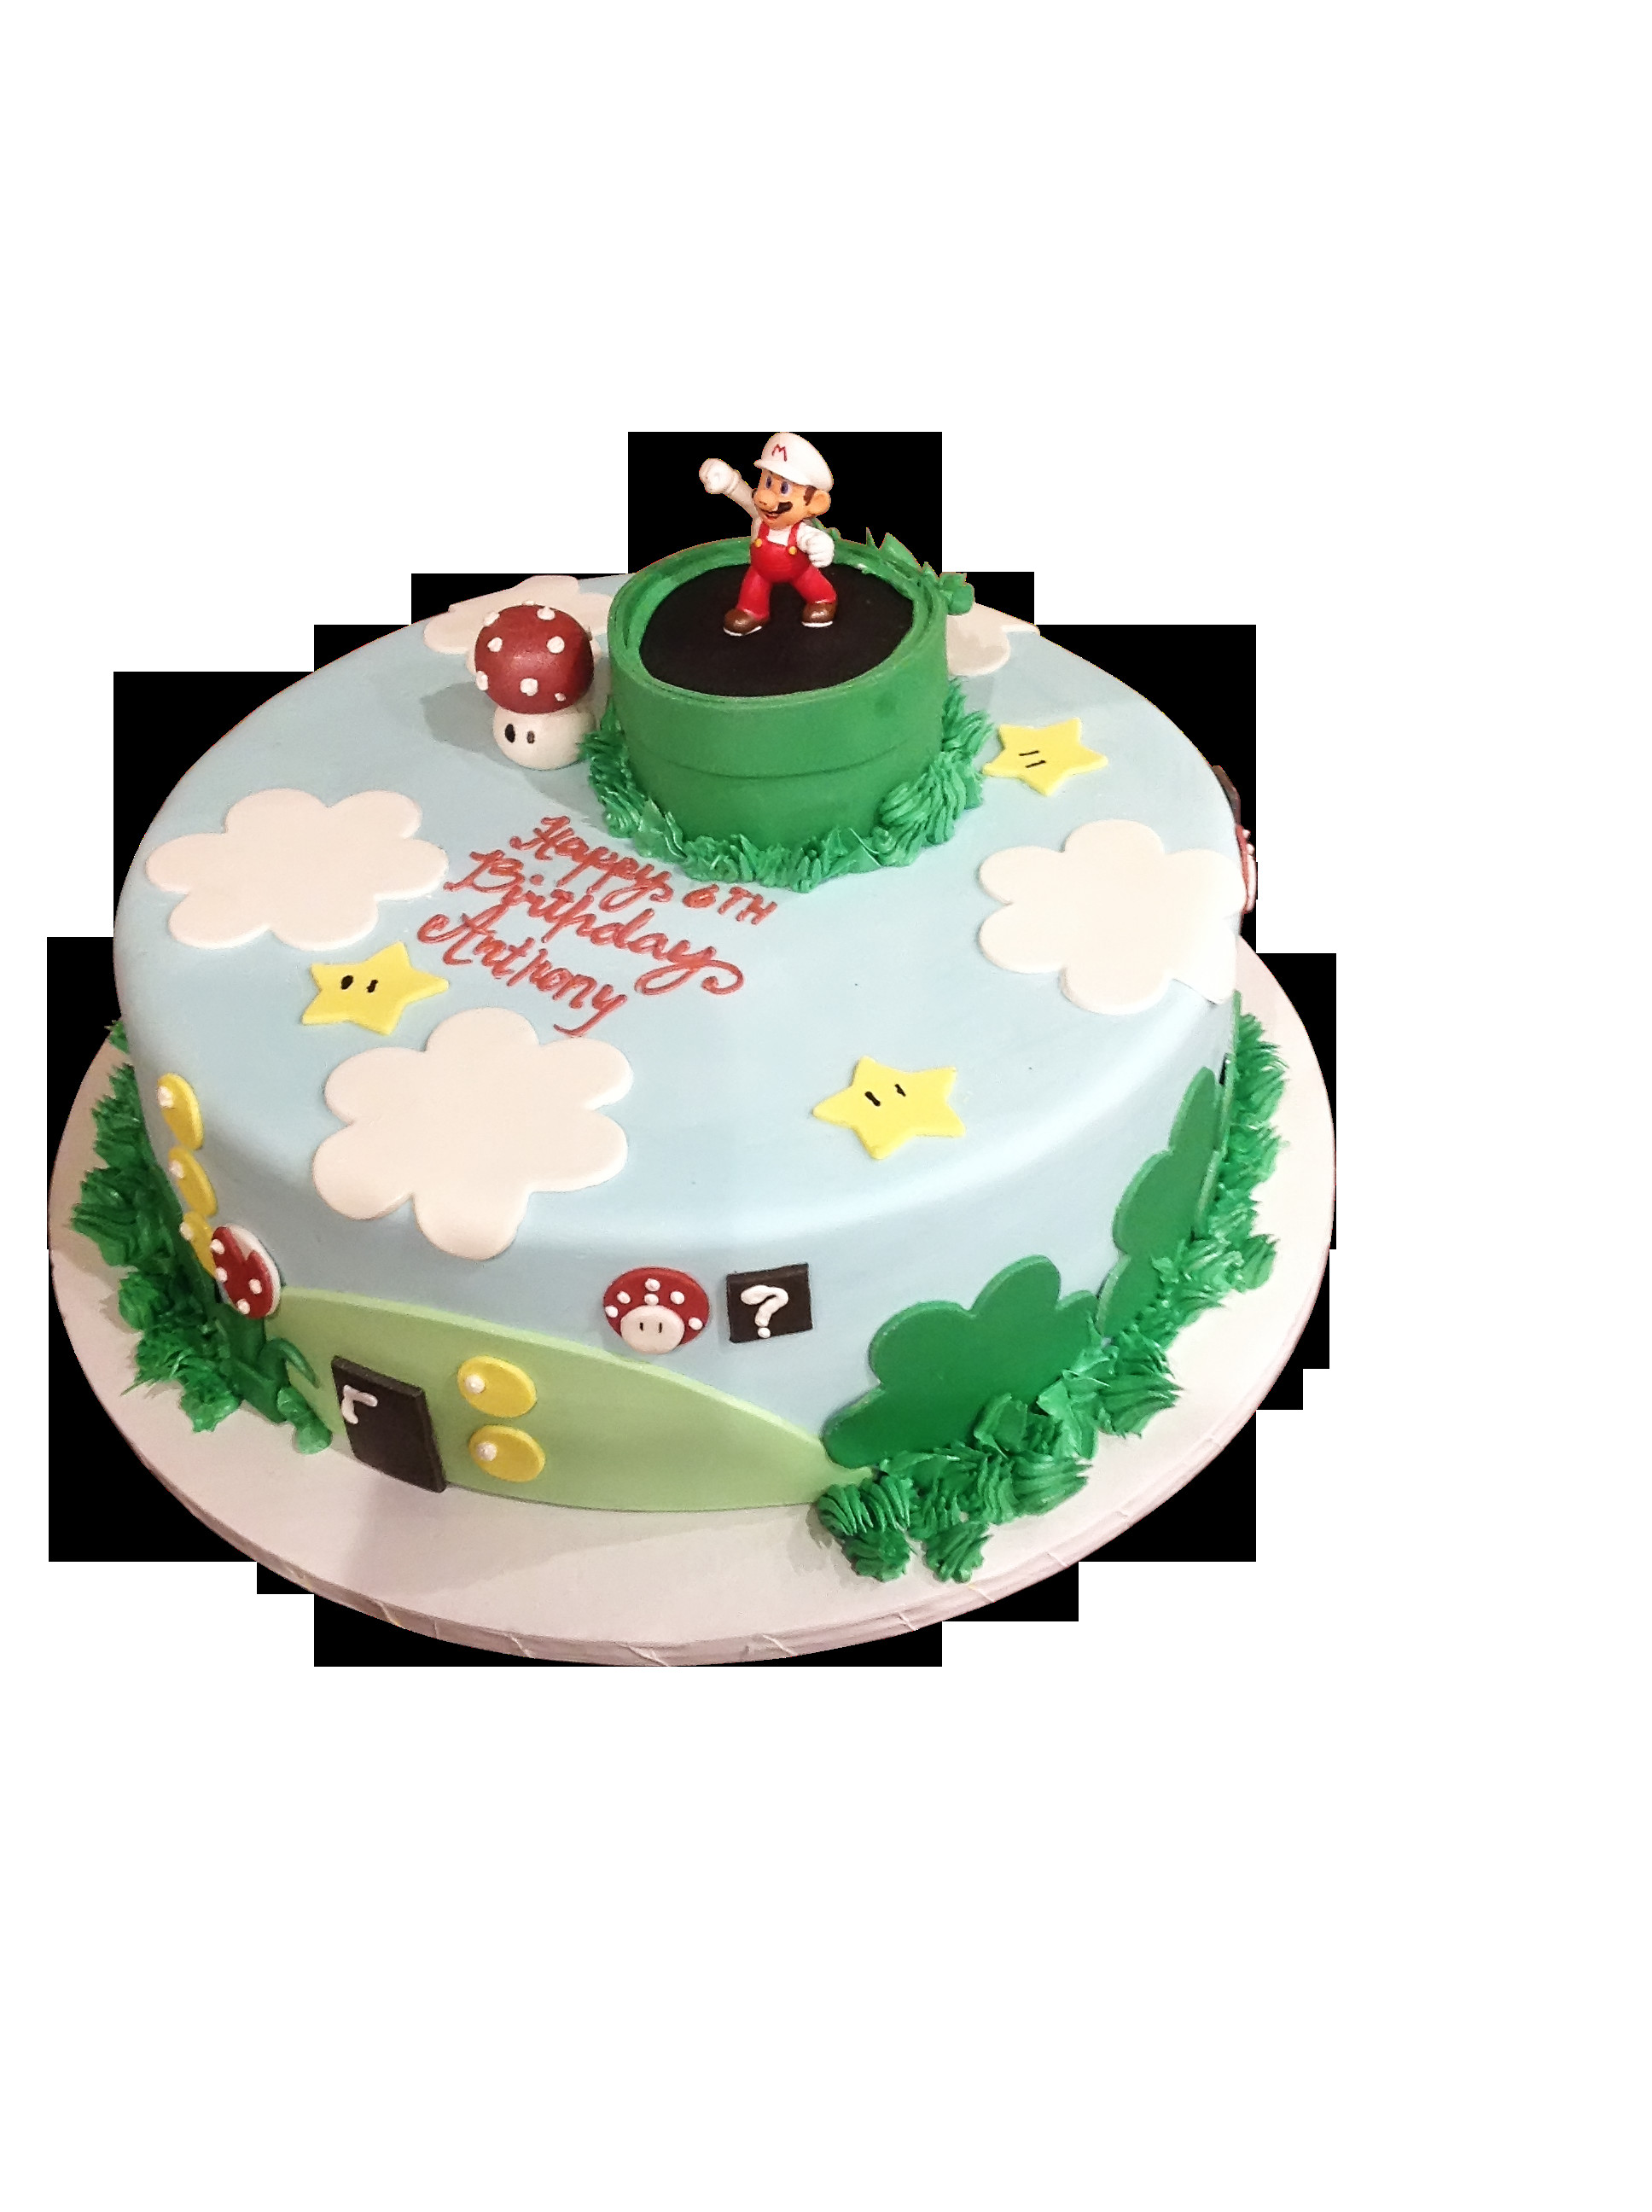 Best ideas about Round Birthday Cake
. Save or Pin Cake designs for round birthday cakes Now.